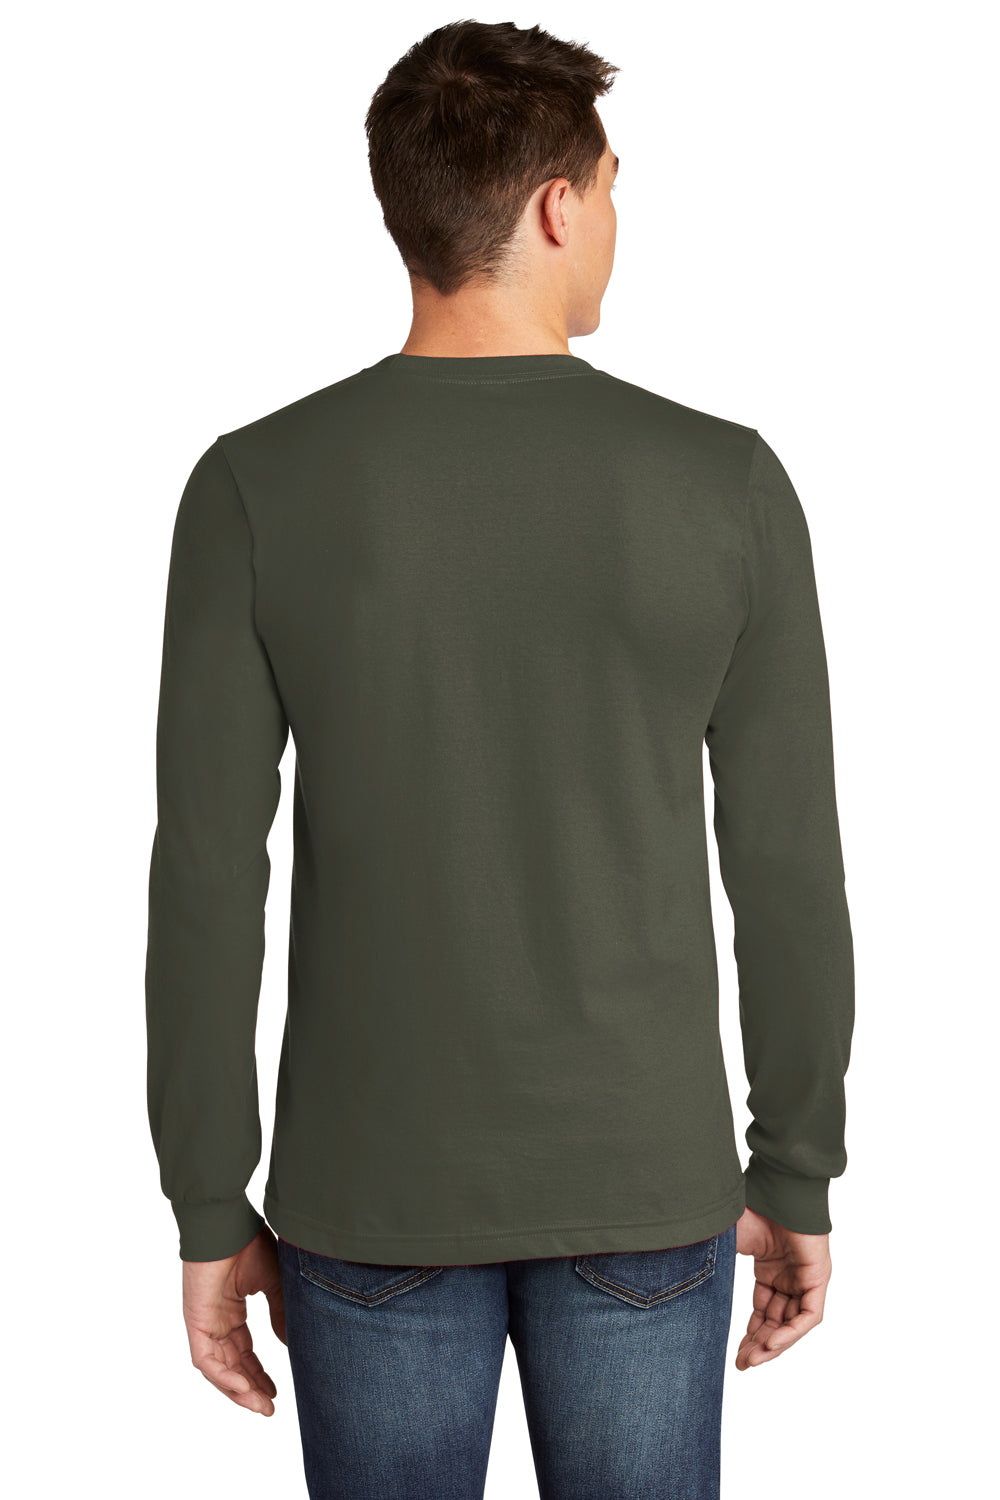 American Apparel 2007W Mens Fine Jersey Long Sleeve Crewneck T-Shirt Lieutenant Green Back